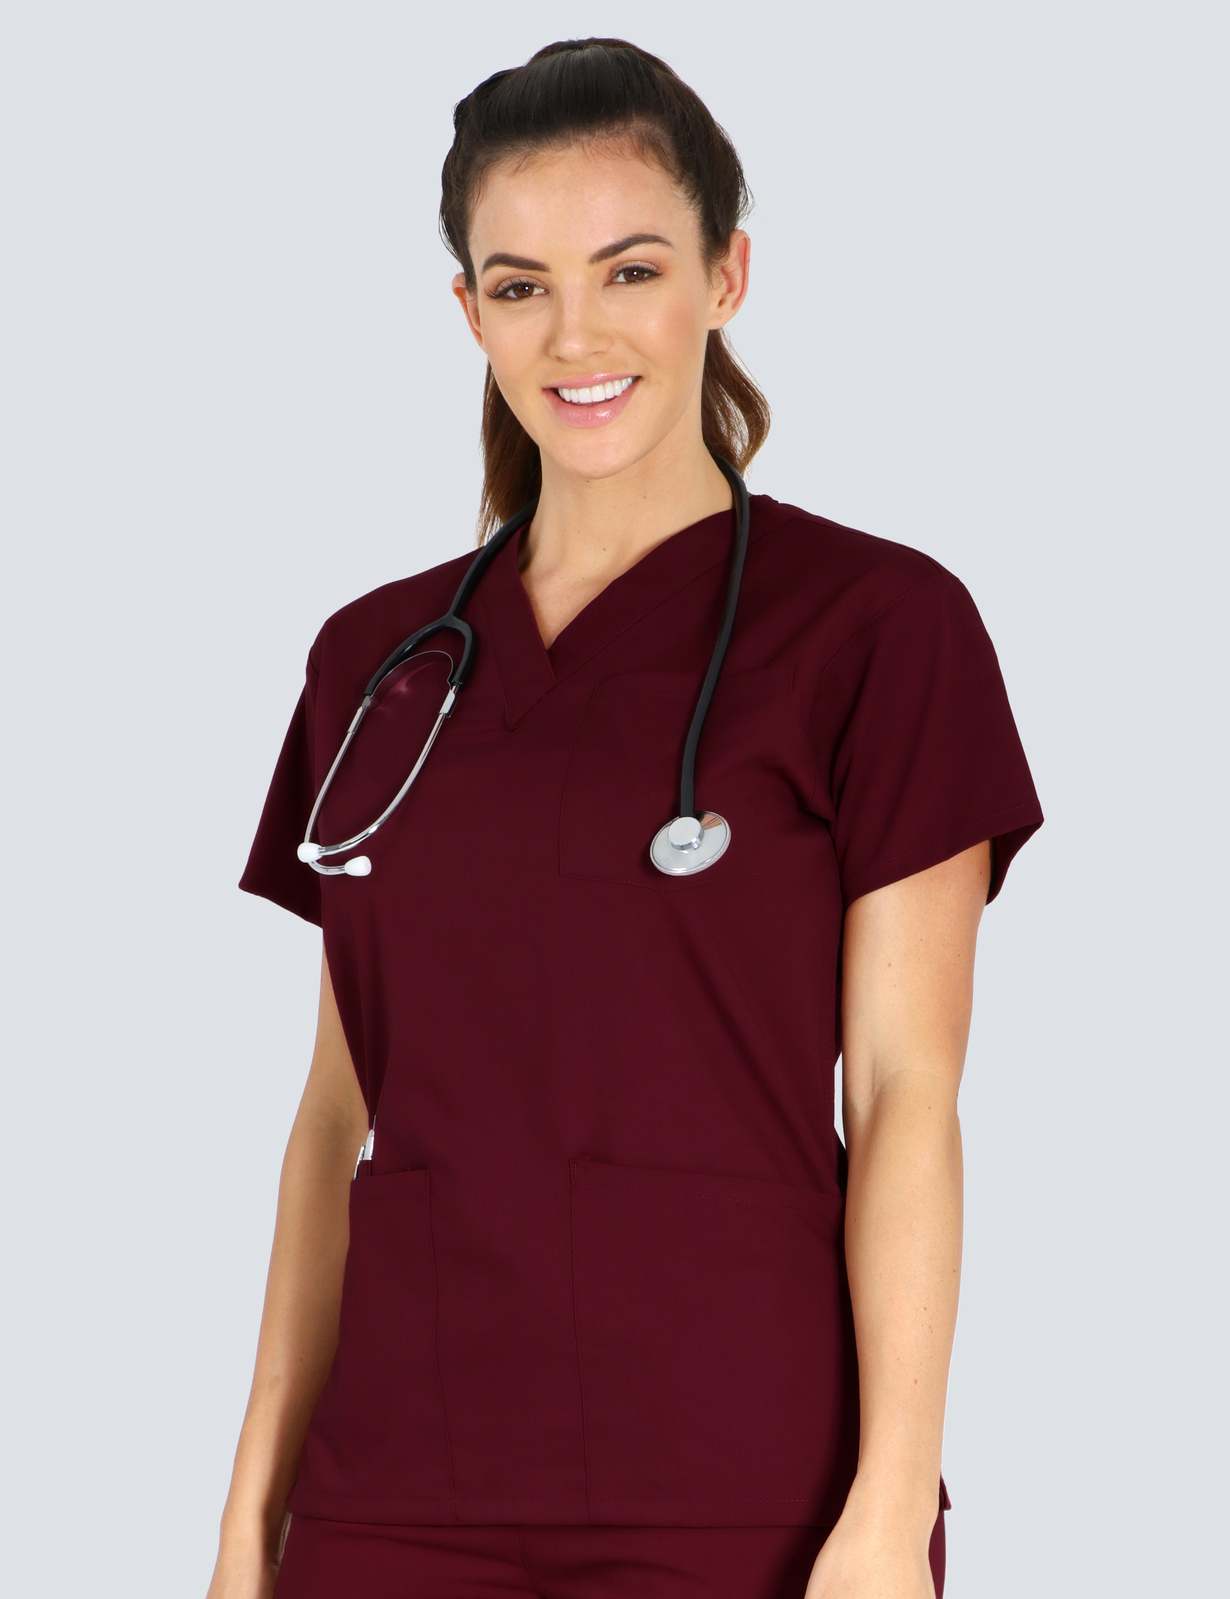 Queensland Children's Hospital Emergency Department Registered  Nurse  Uniform Top Bundle  (4 Pocket Top in Burgundy incl Logos)